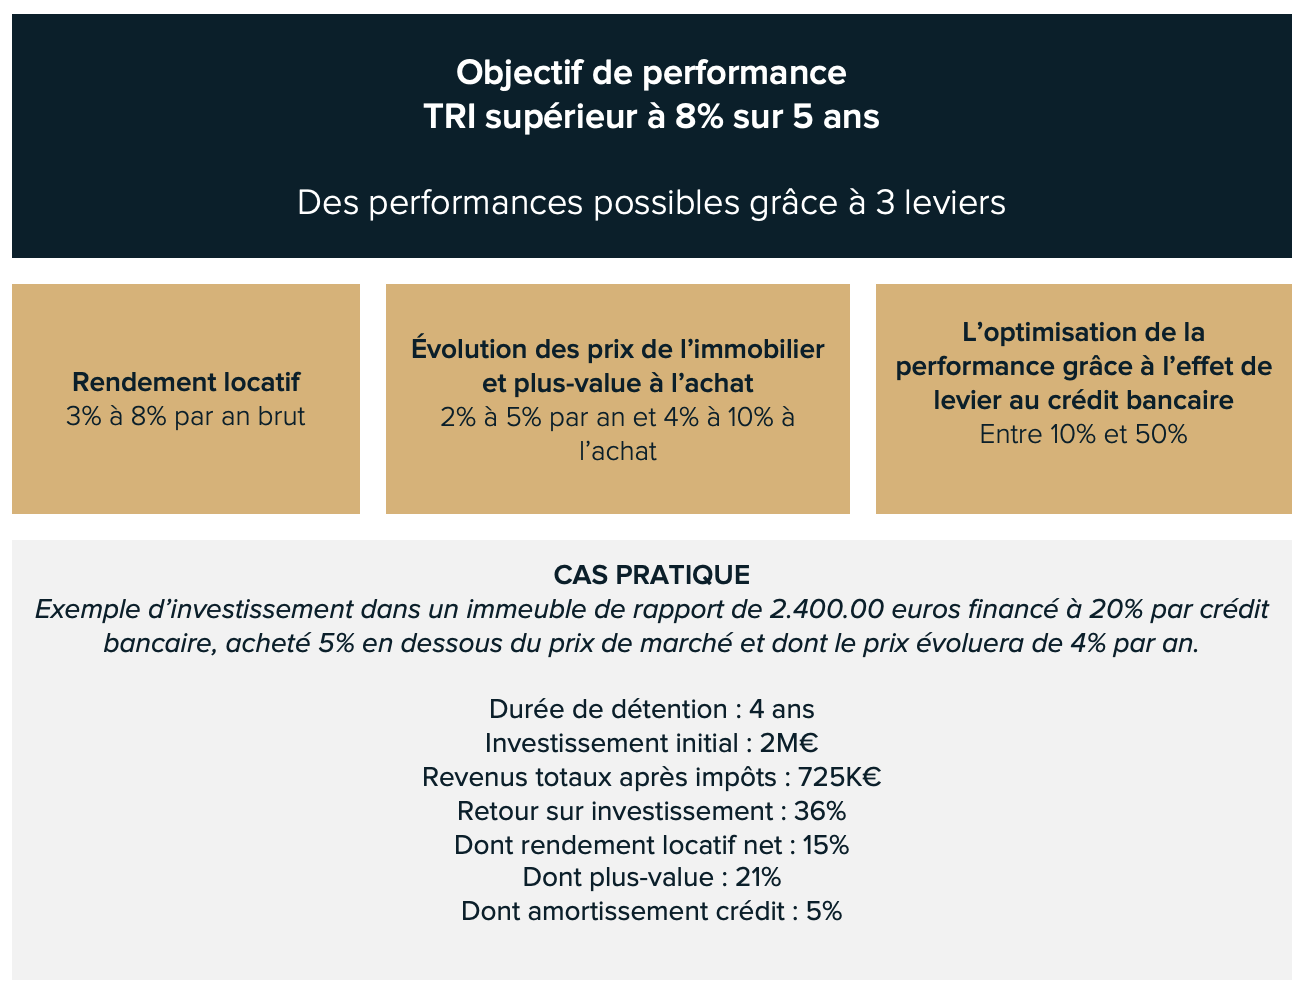 Objectifs de performance investissement locatif avec Anaxago